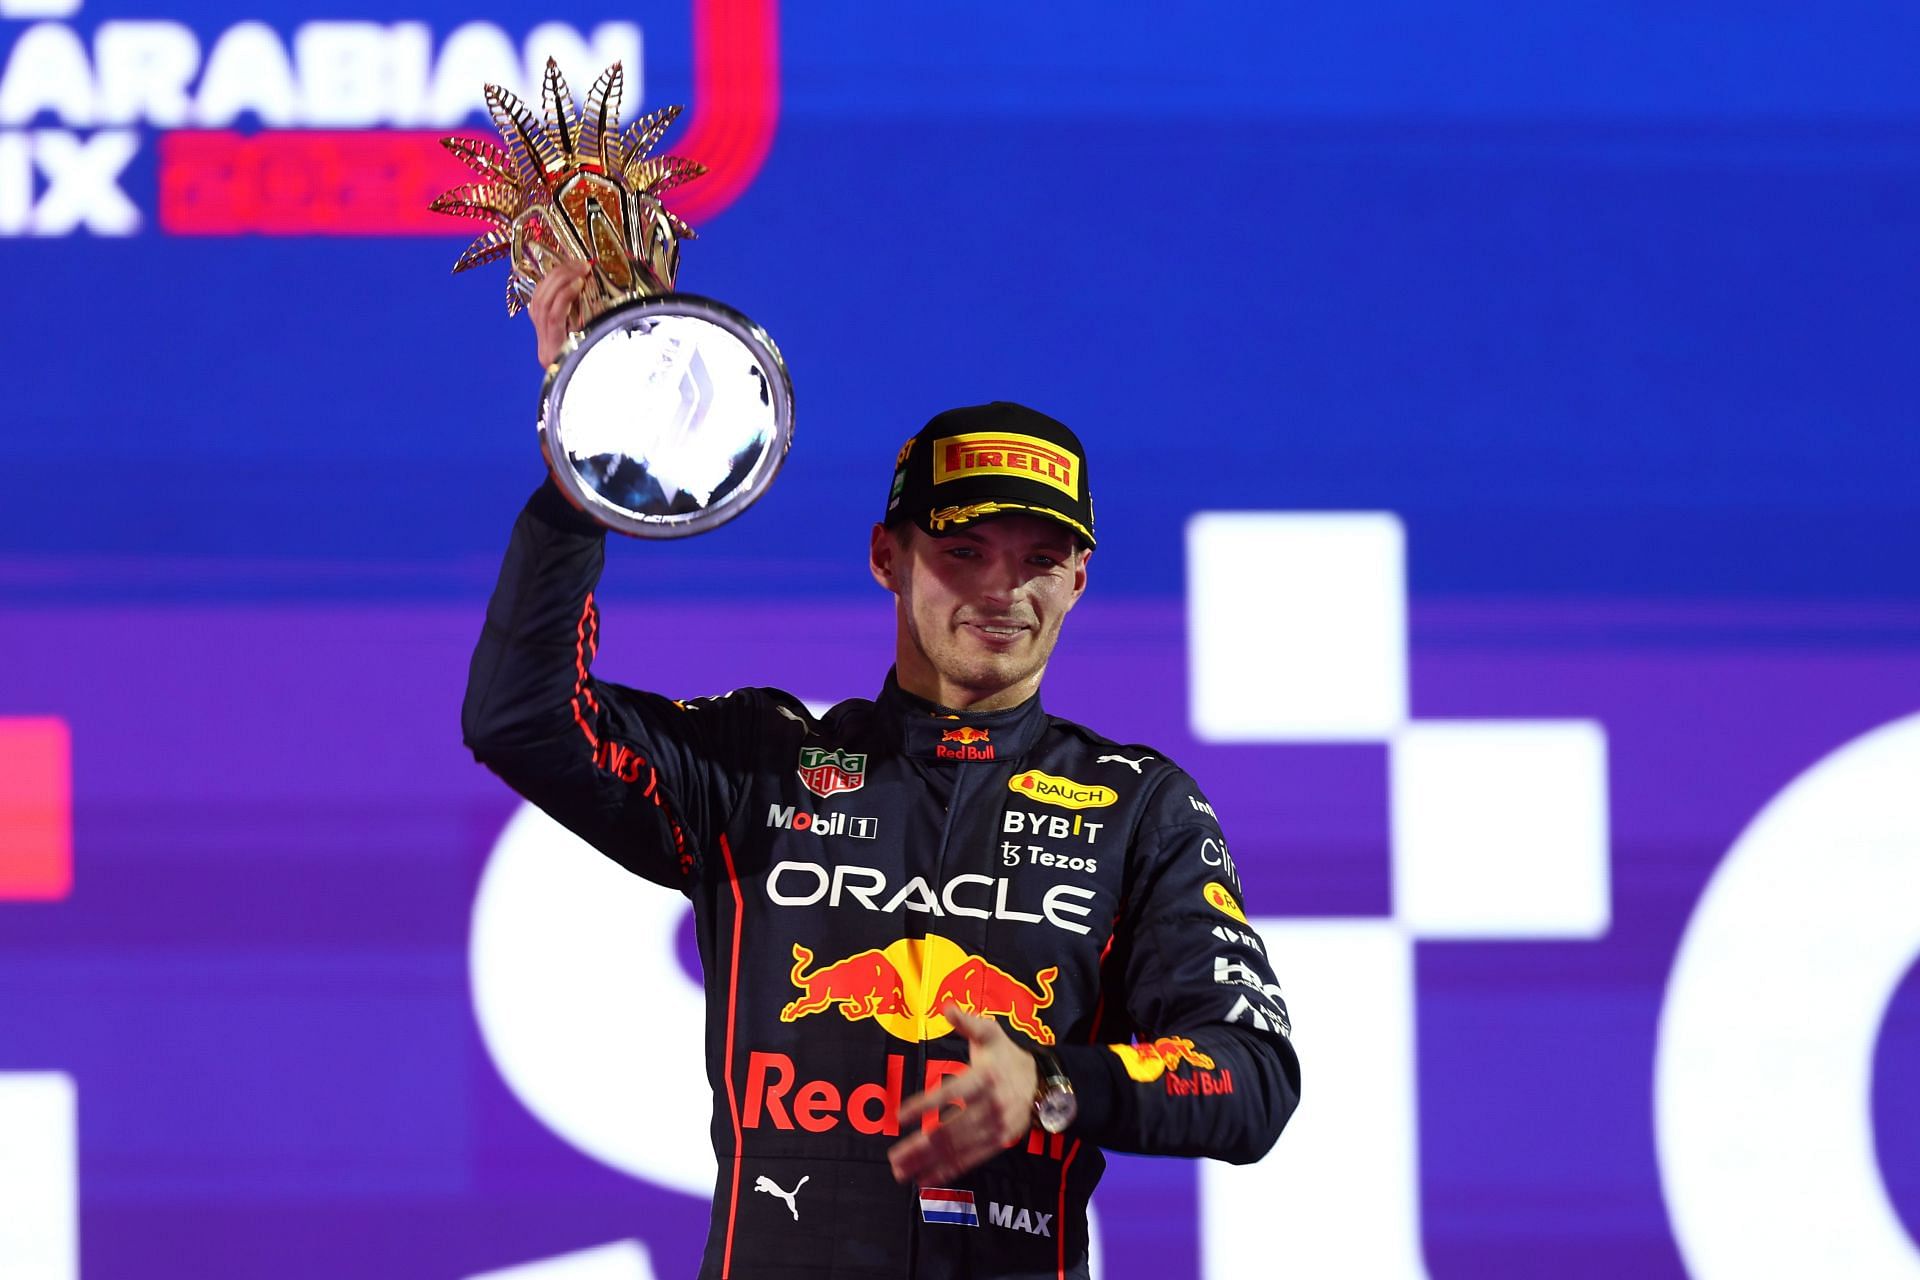 Max Verstappen on the podium at the Grand Prix of Saudi Arabia